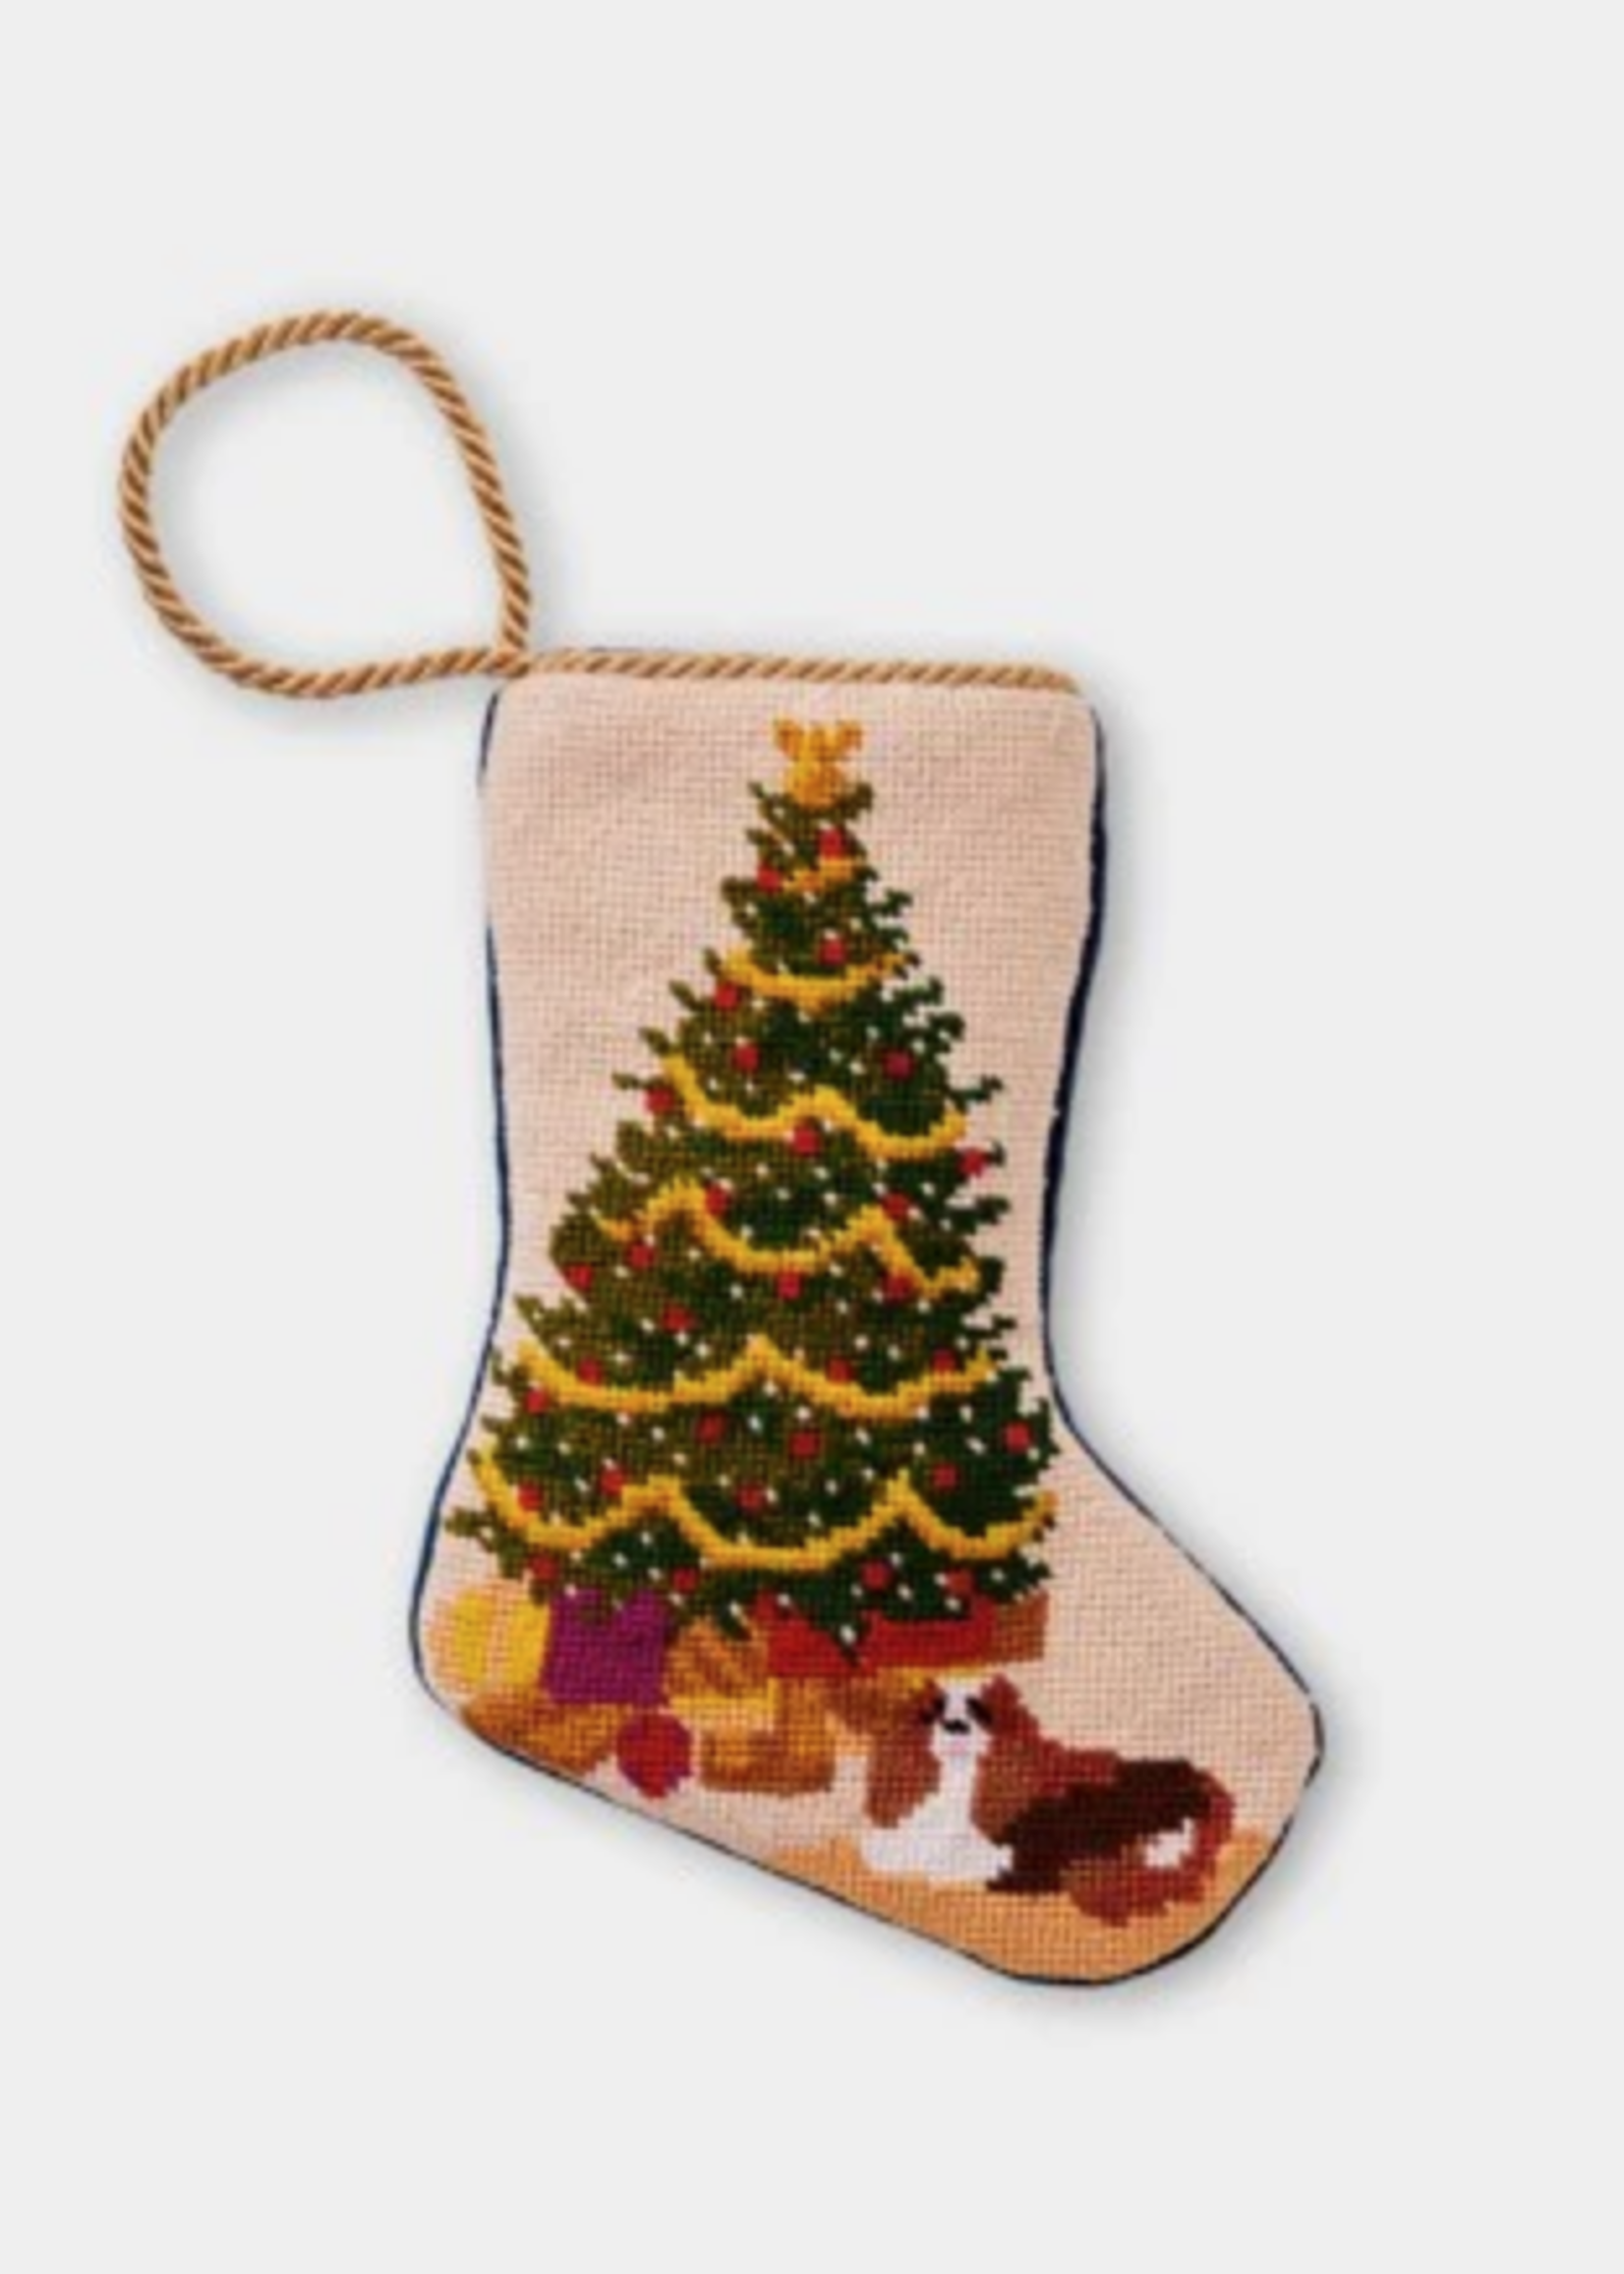 Bauble Stockings Bauble Stocking O Christmas Tree